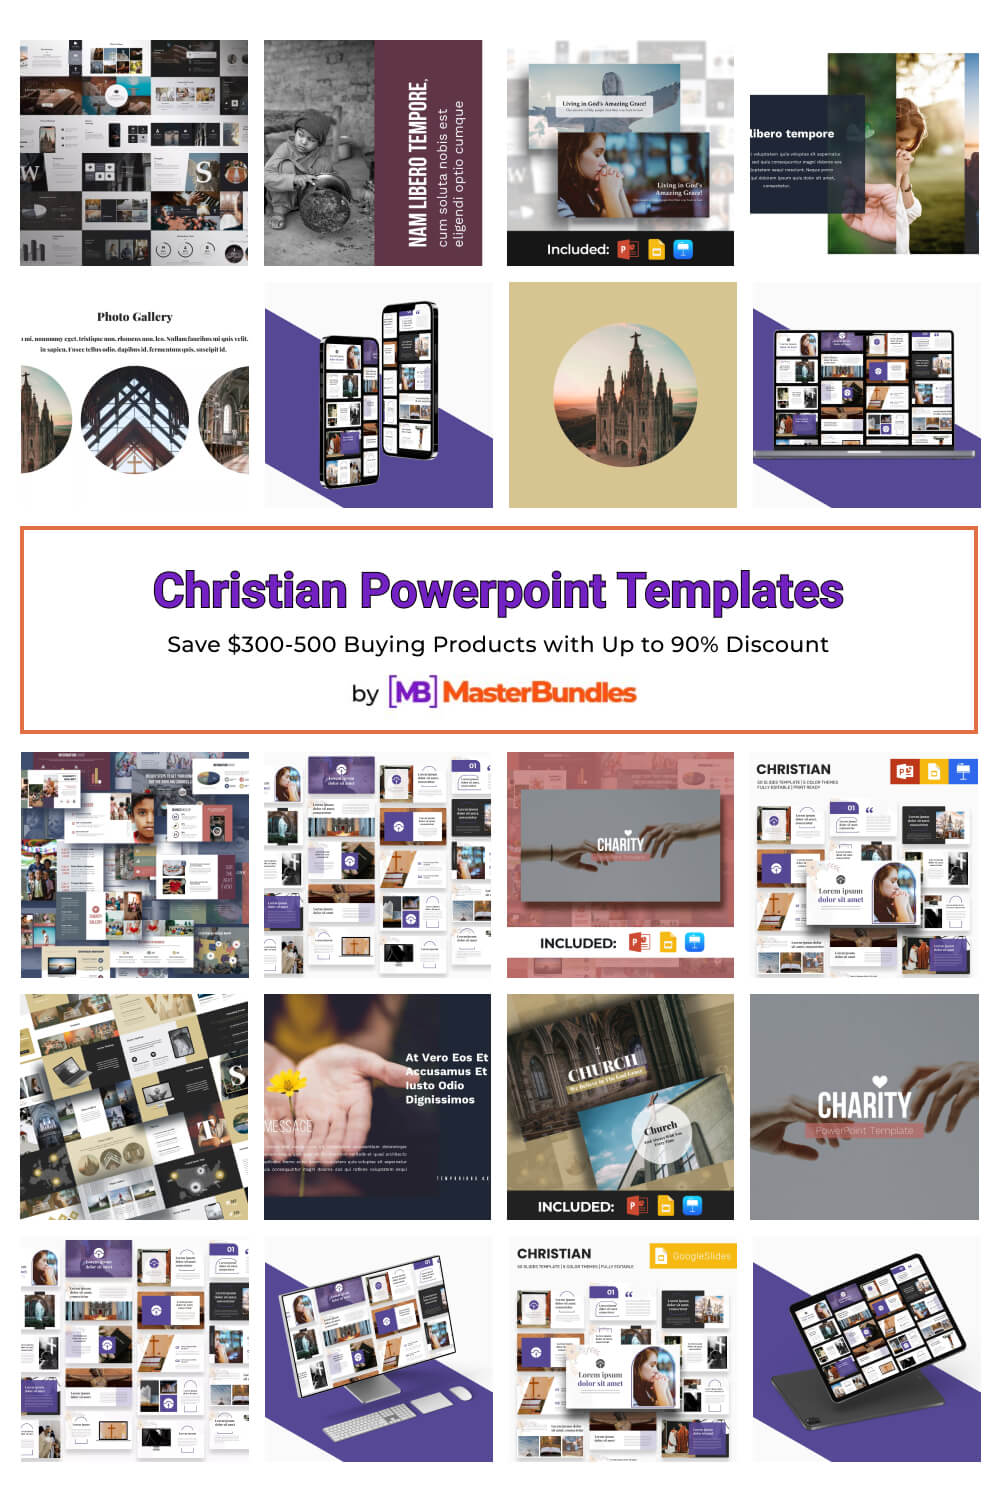 christian powerpoint templates pinterest image.